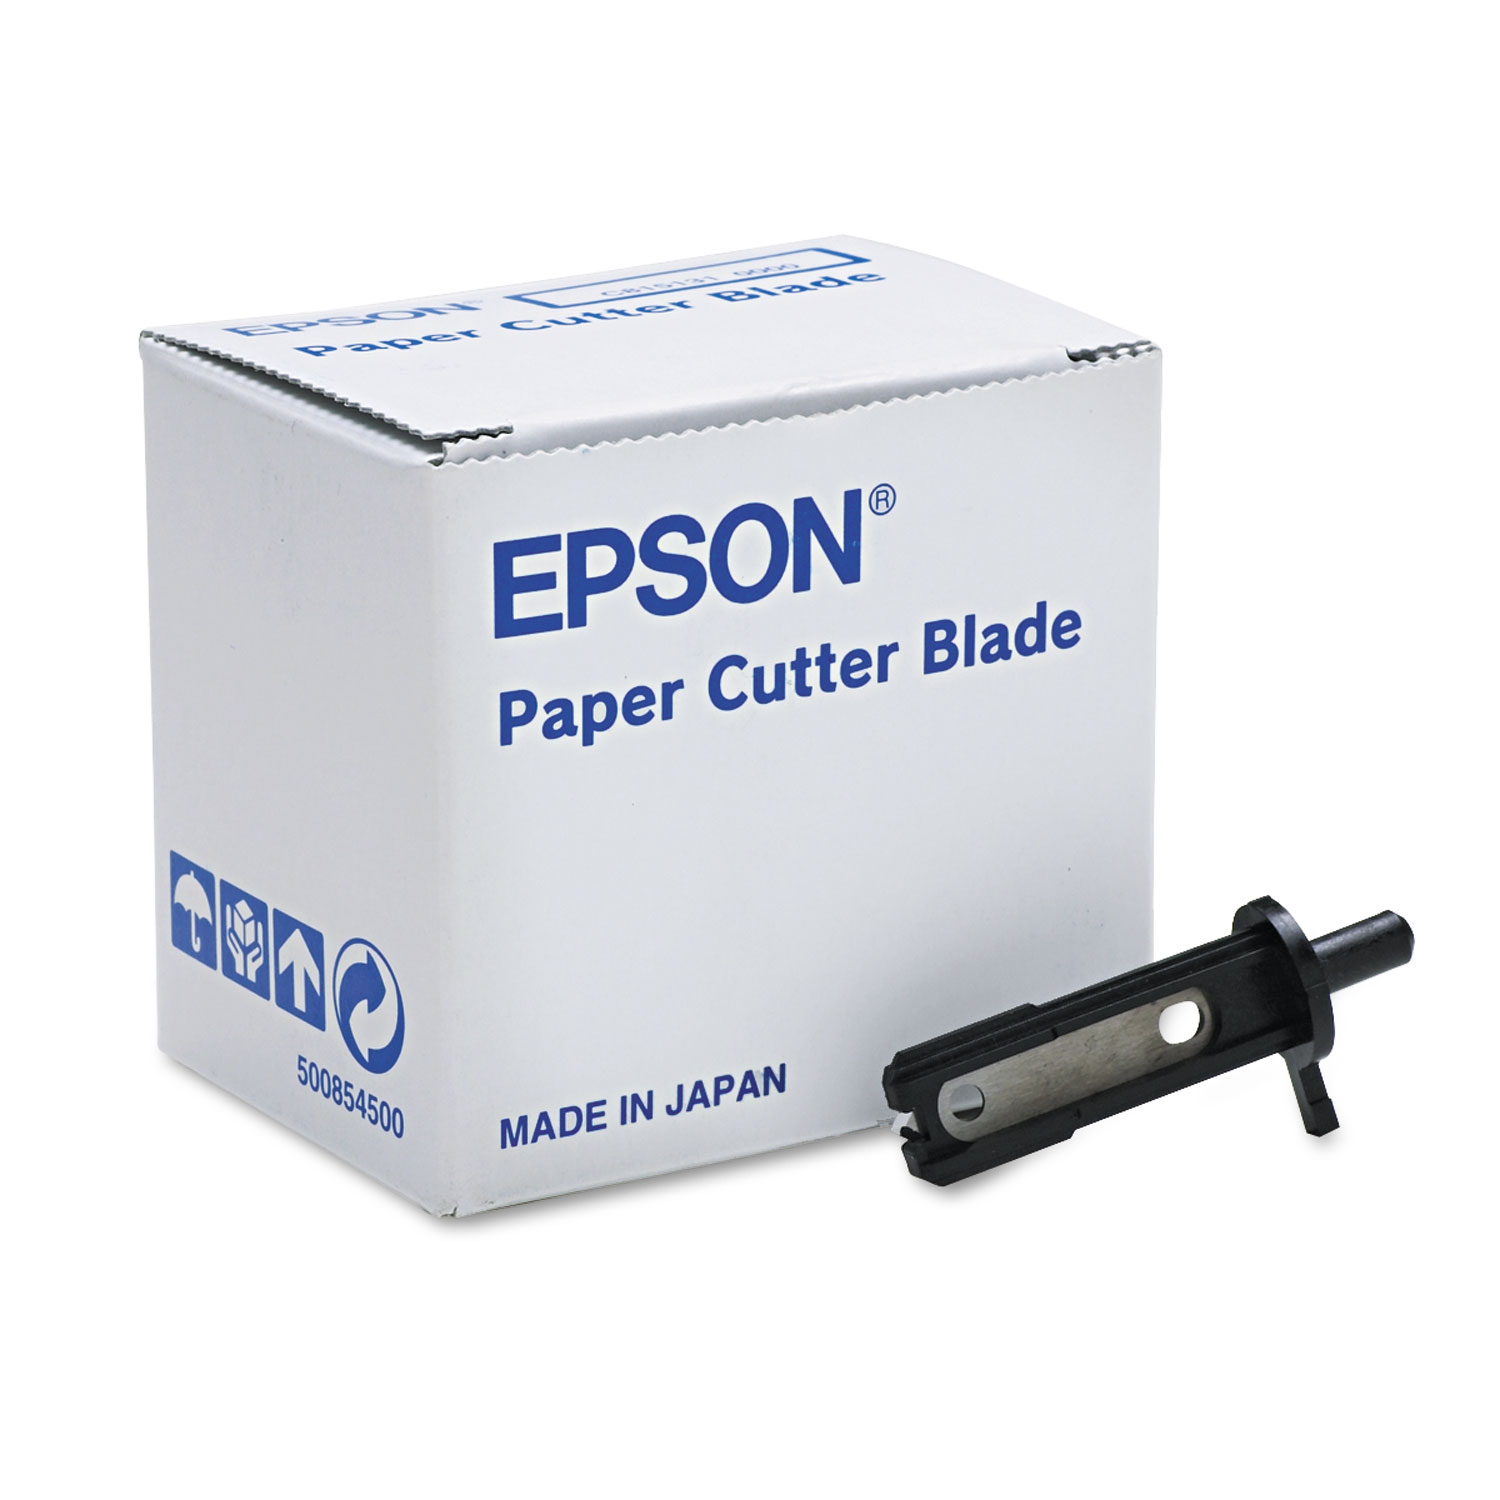  Epson C815131 Stylus Pro 10000 Replacement Cutter Blade Unit (EPSC815131) 